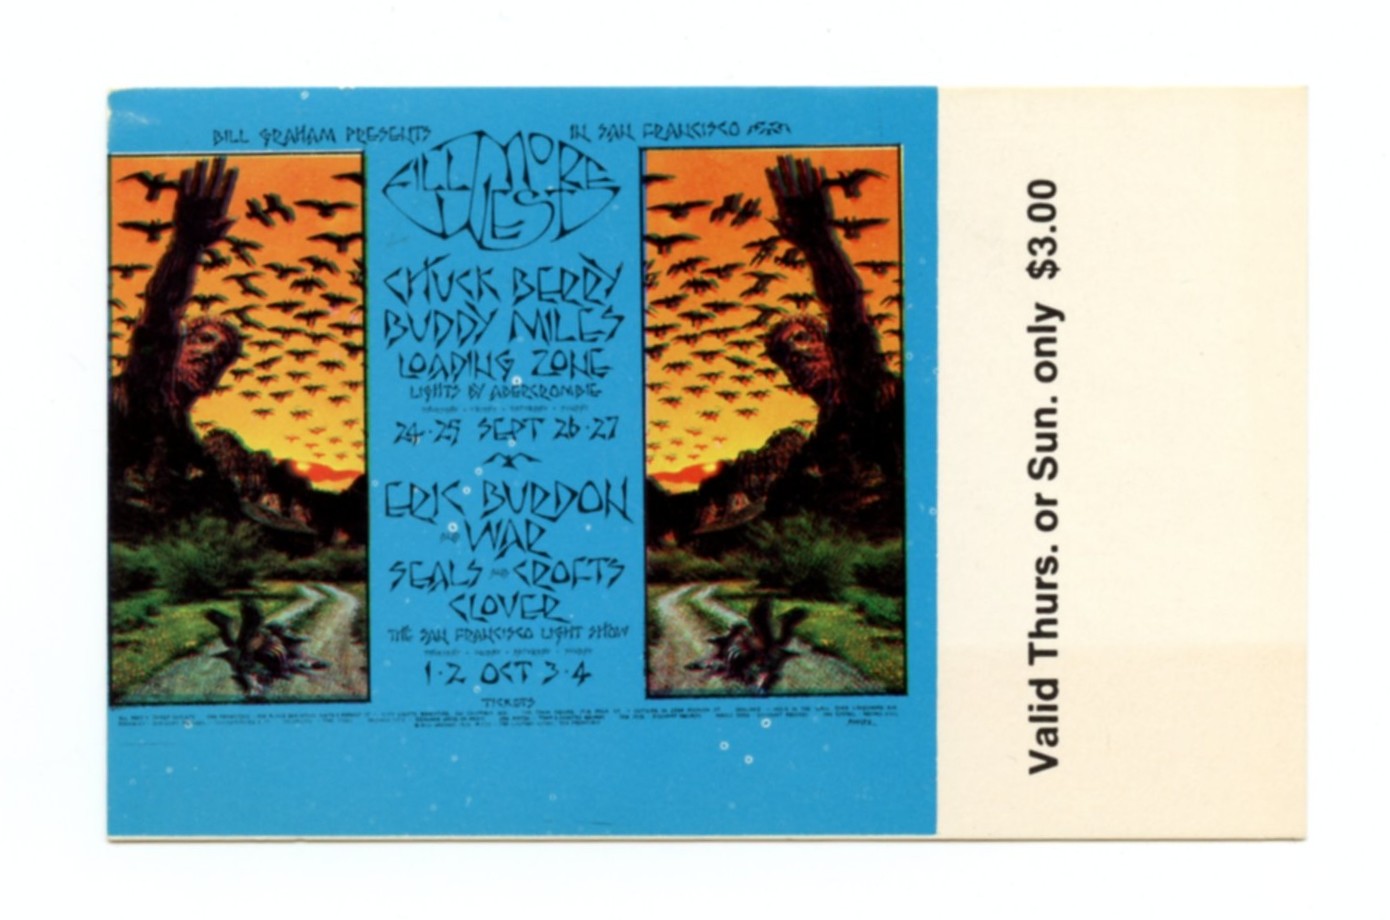 BG 250 Ticket Chuck Berry, Eric Burdon Buddy Miles 1970 Sep 24